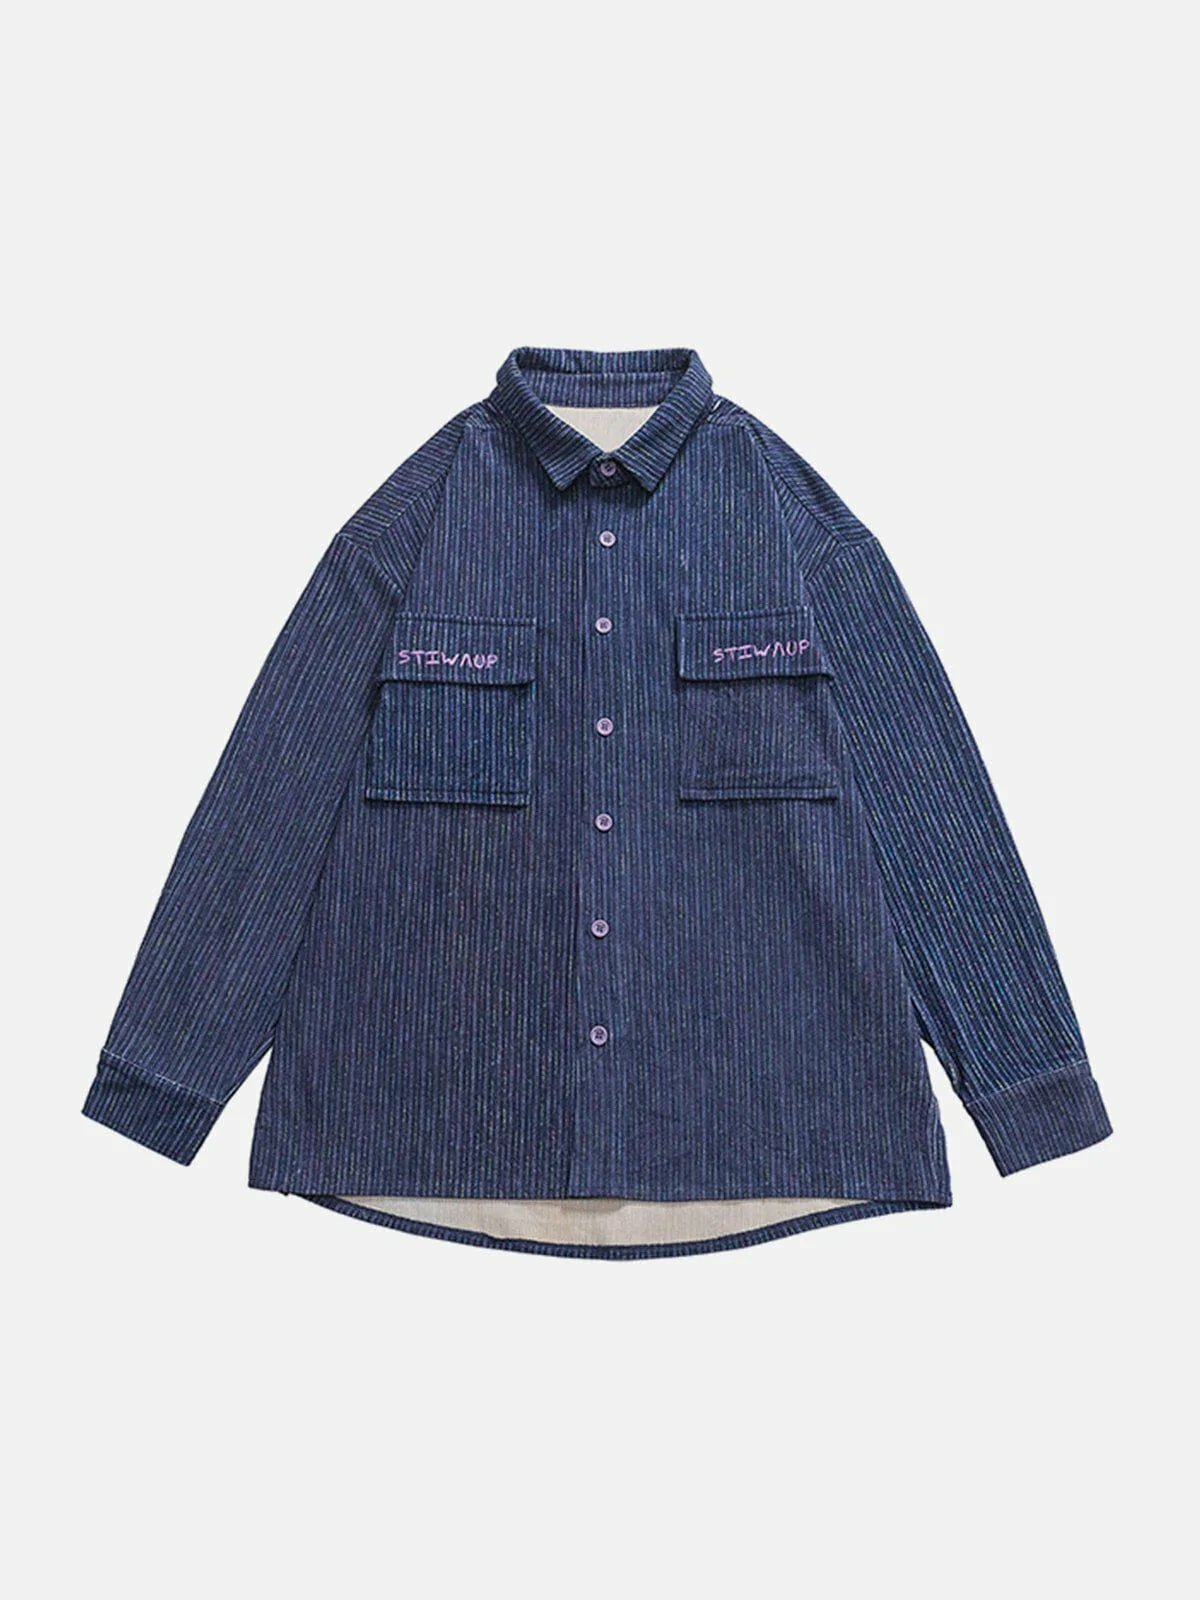 stiwaup' longsleeved shirt edgy & retro streetwear 3067